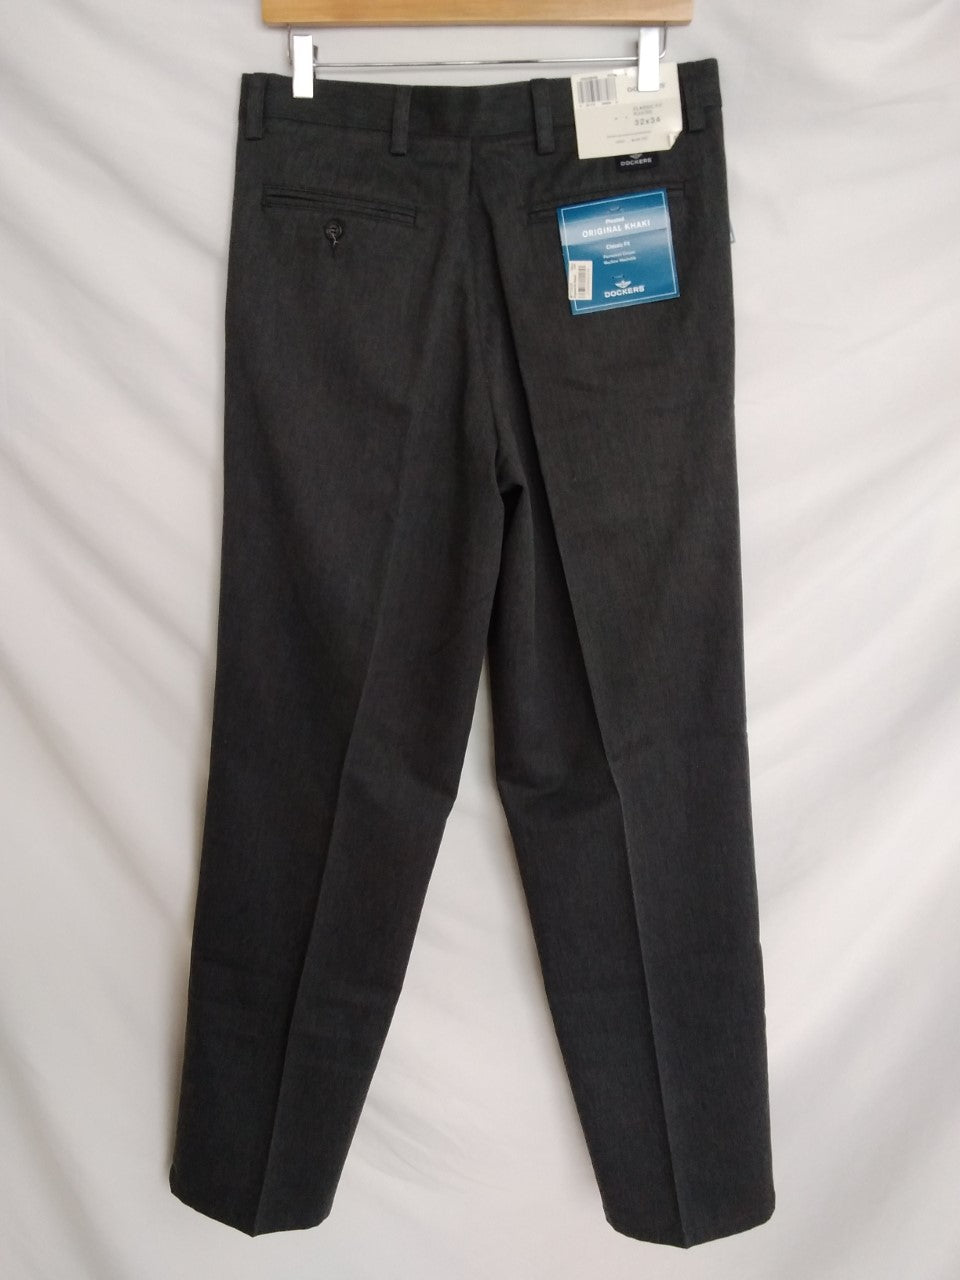 Dockers Men's Pleated Classic Fit Pants - Size 32x34